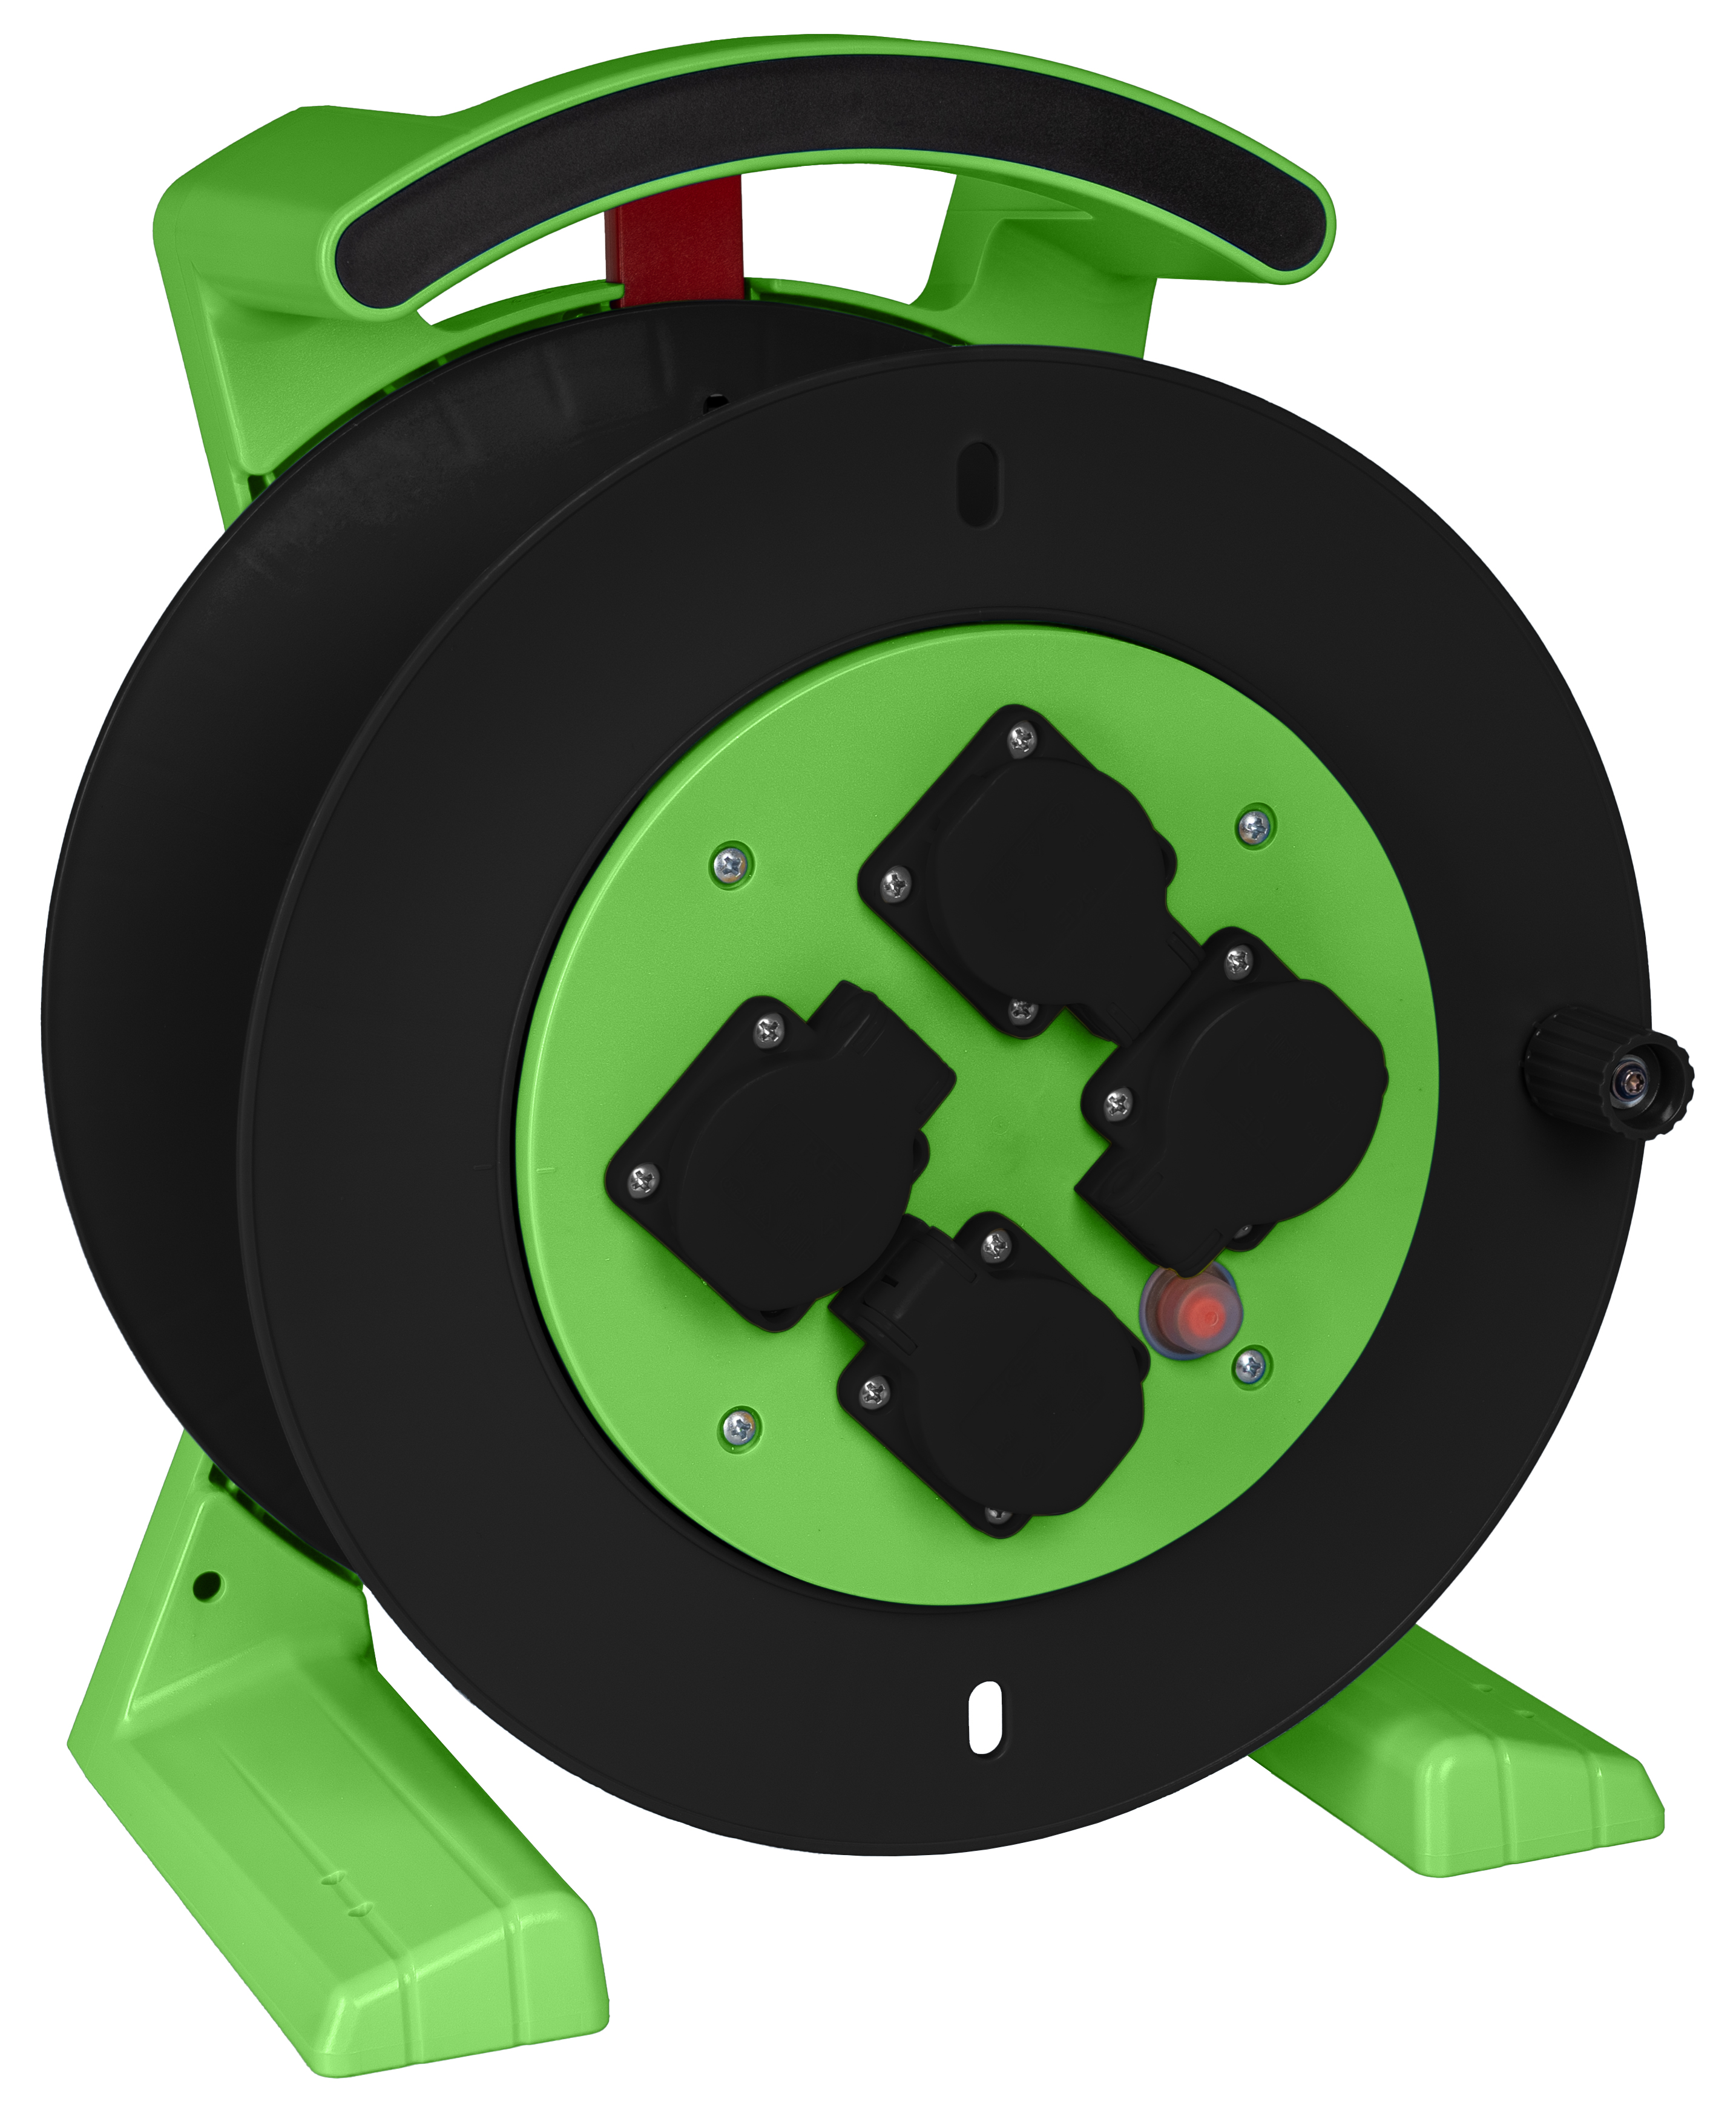 Leerkabeltrommel in grün-schwarz, 4 x Schutzkontakt-Steckdose JUMBO L 2.0